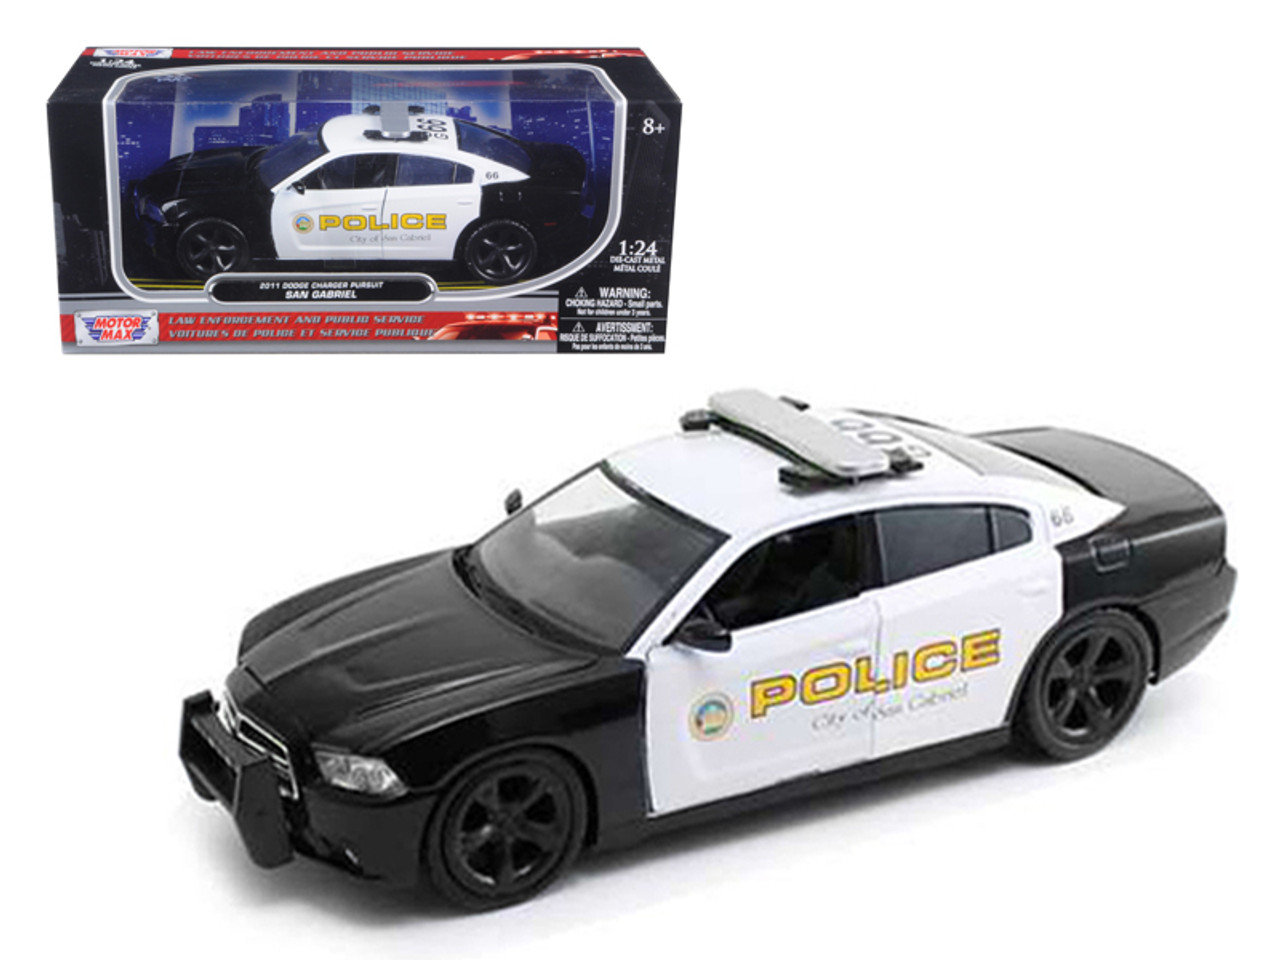 2011 Dodge Charger Pursuit San Gabriel Police Car 1/24 Diecast Car Model by Motormax